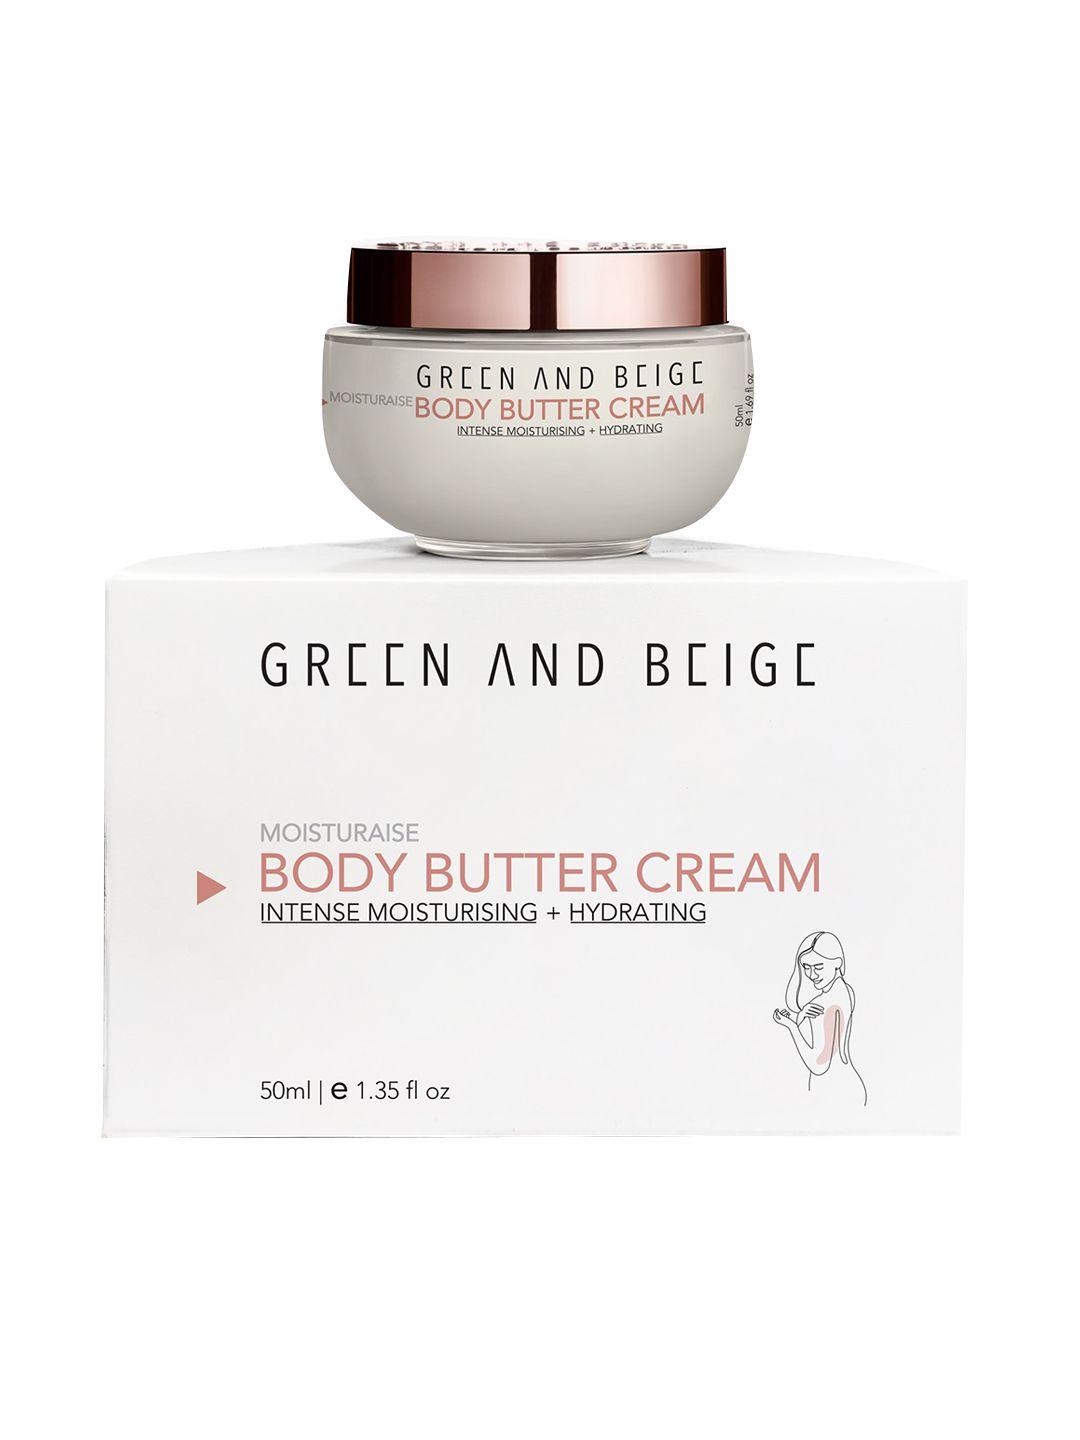 green and beige moisturaise body butter cream for intense moisturising & hydrating - 50ml